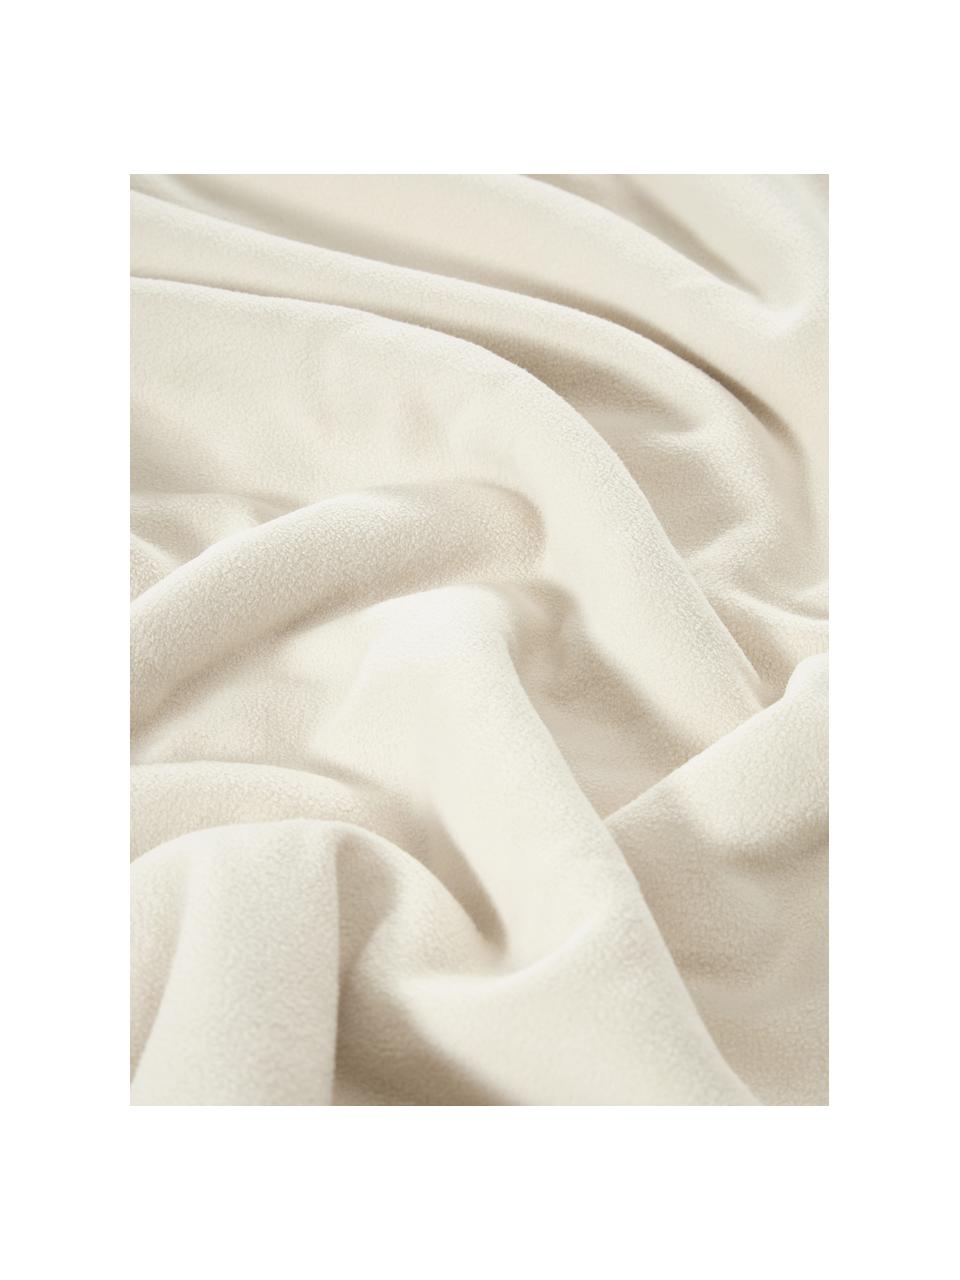 Coperta in tessuto teddy bianco crema Dotty, Retro: 95% poliestere, 5% elasta, Bianco crema, Larg. 130 x Lung. 170 cm